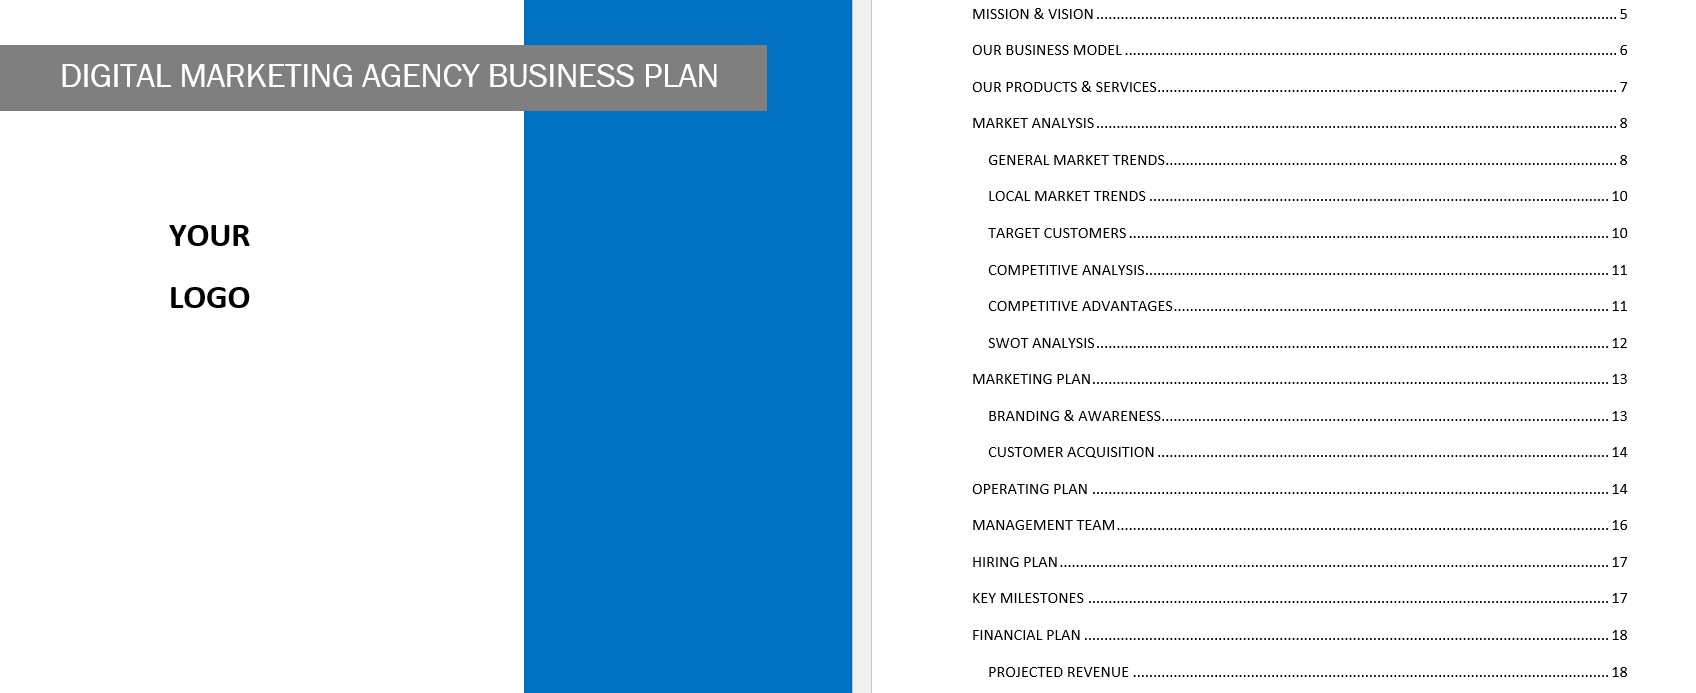 Digital marketing agency business plan in Word